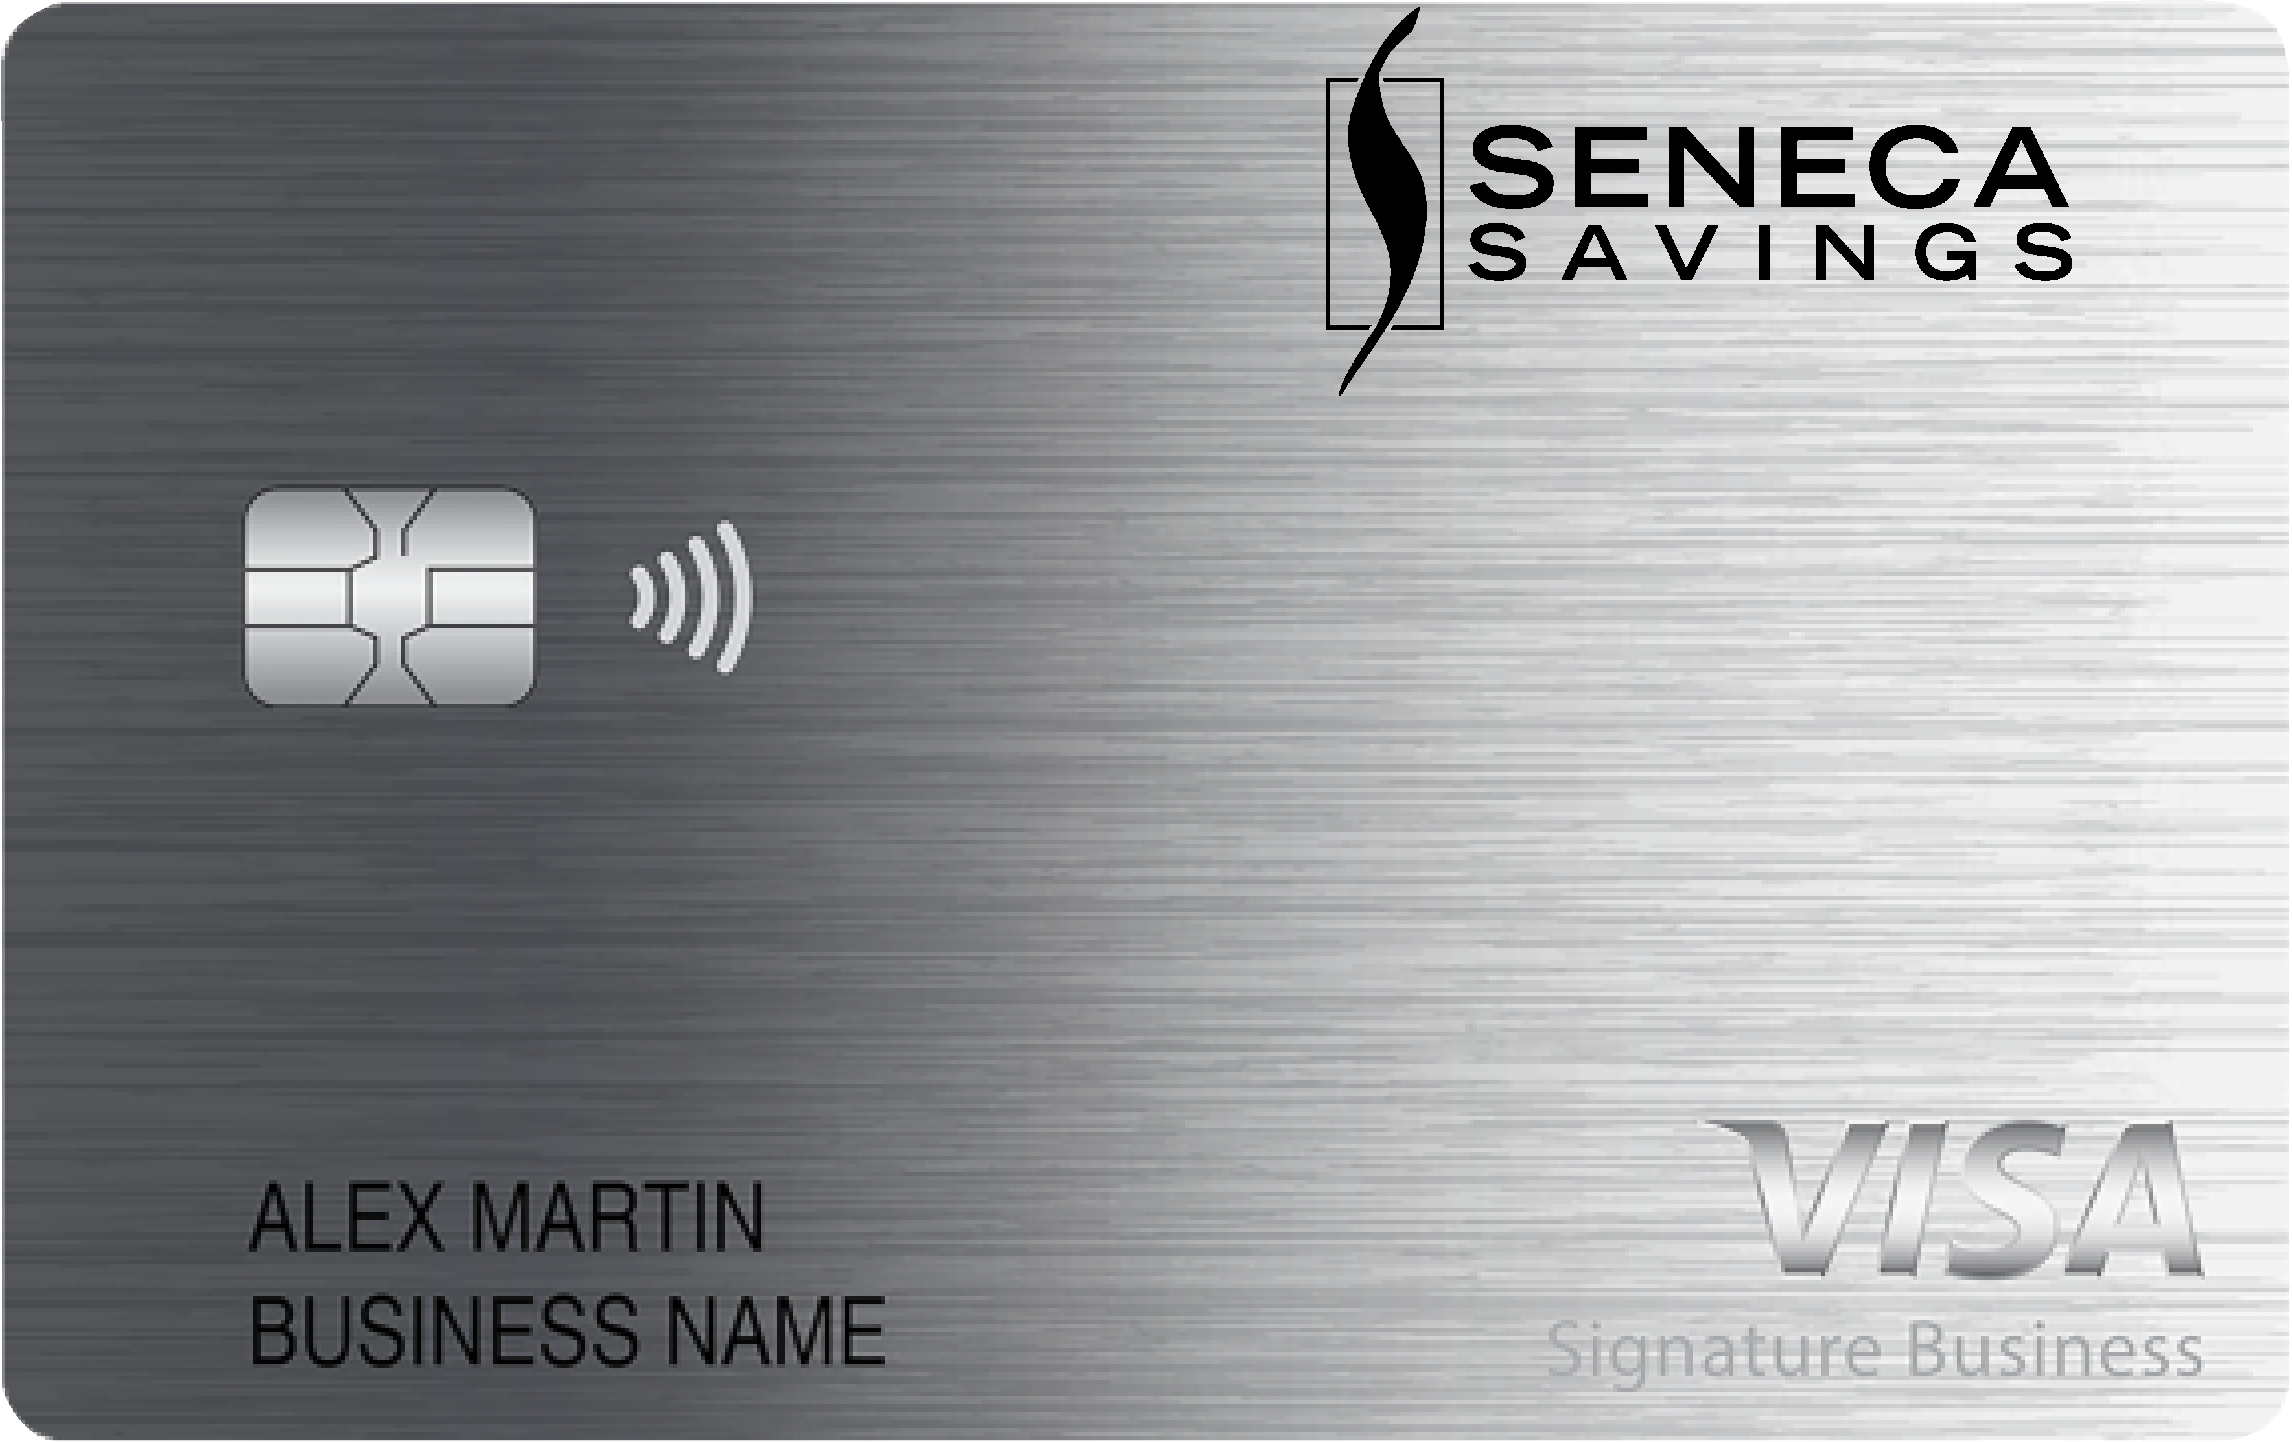 Seneca Savings Smart Business Rewards Card